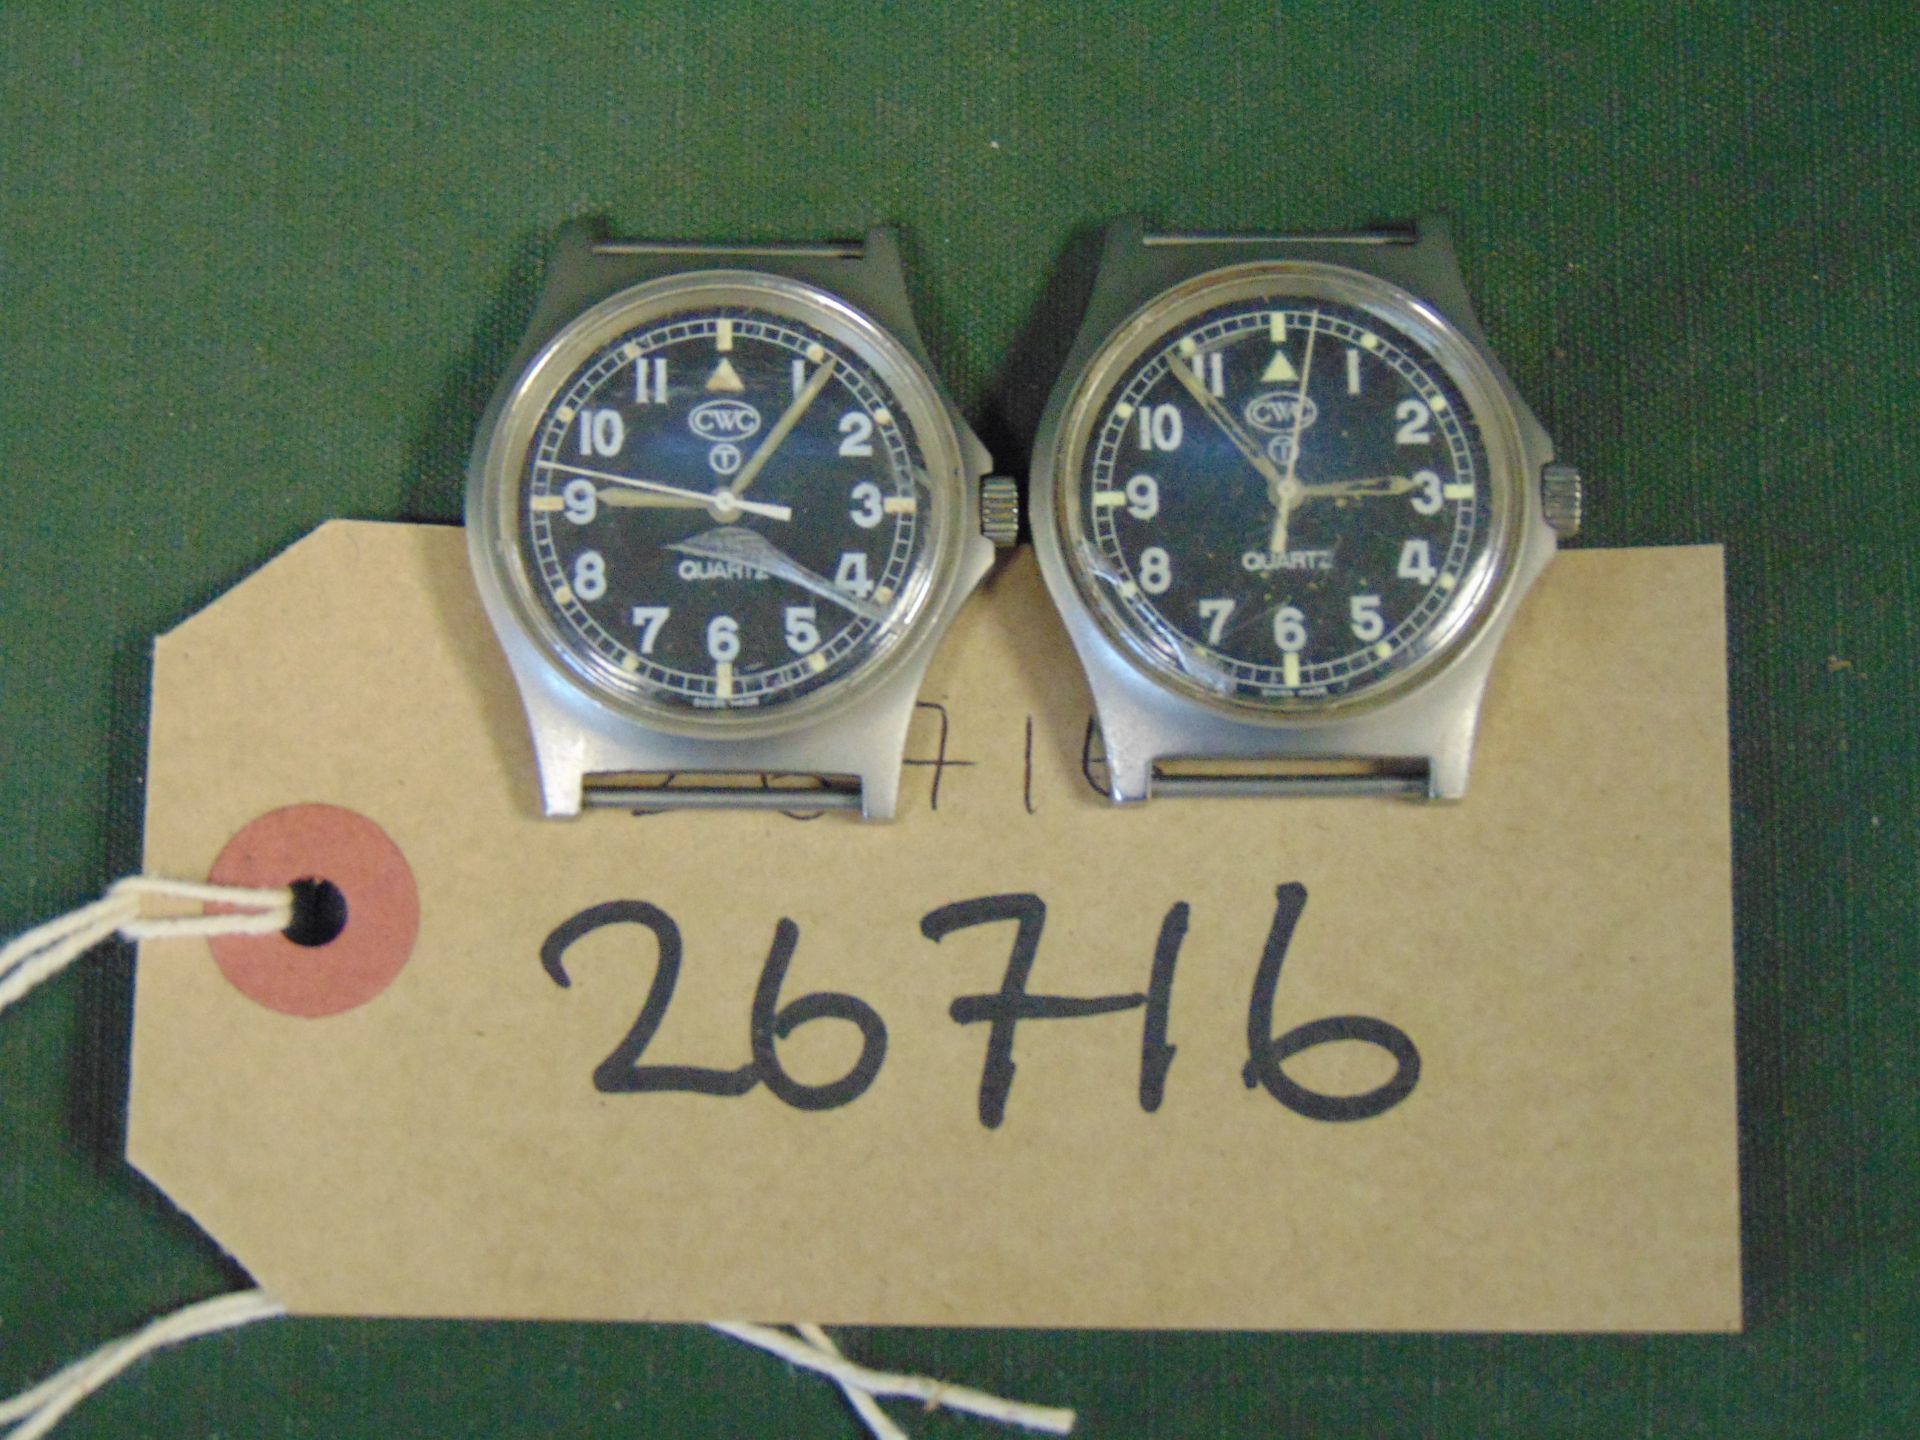 2 x CWC 0522 Royal Marines quartz wrist watches